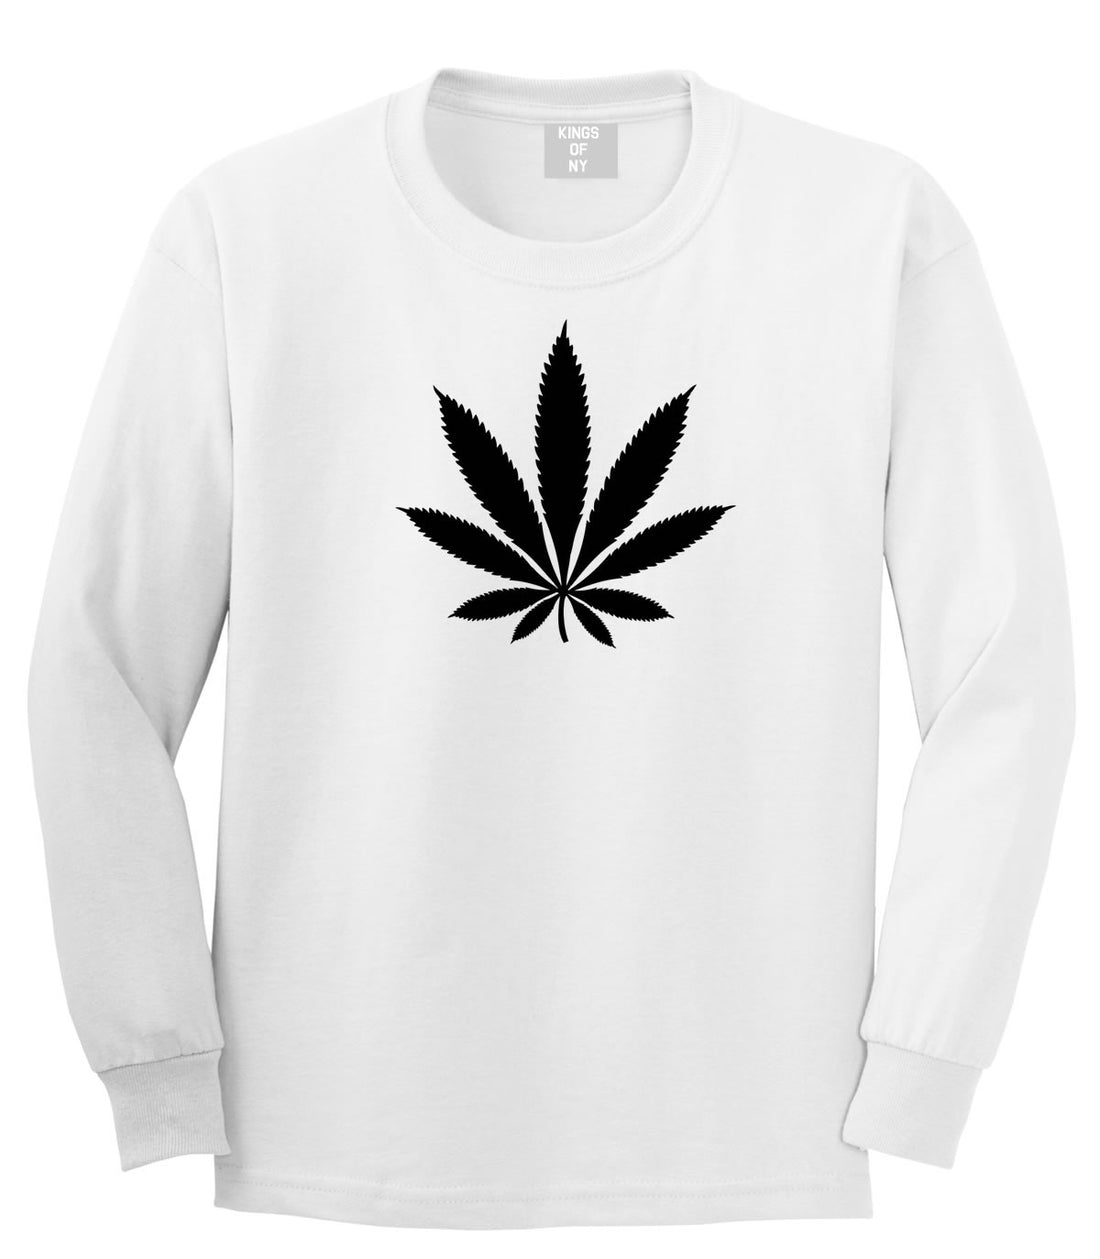 Weed Leaf Marijuana Long Sleeve T-Shirt by Kings Of NY